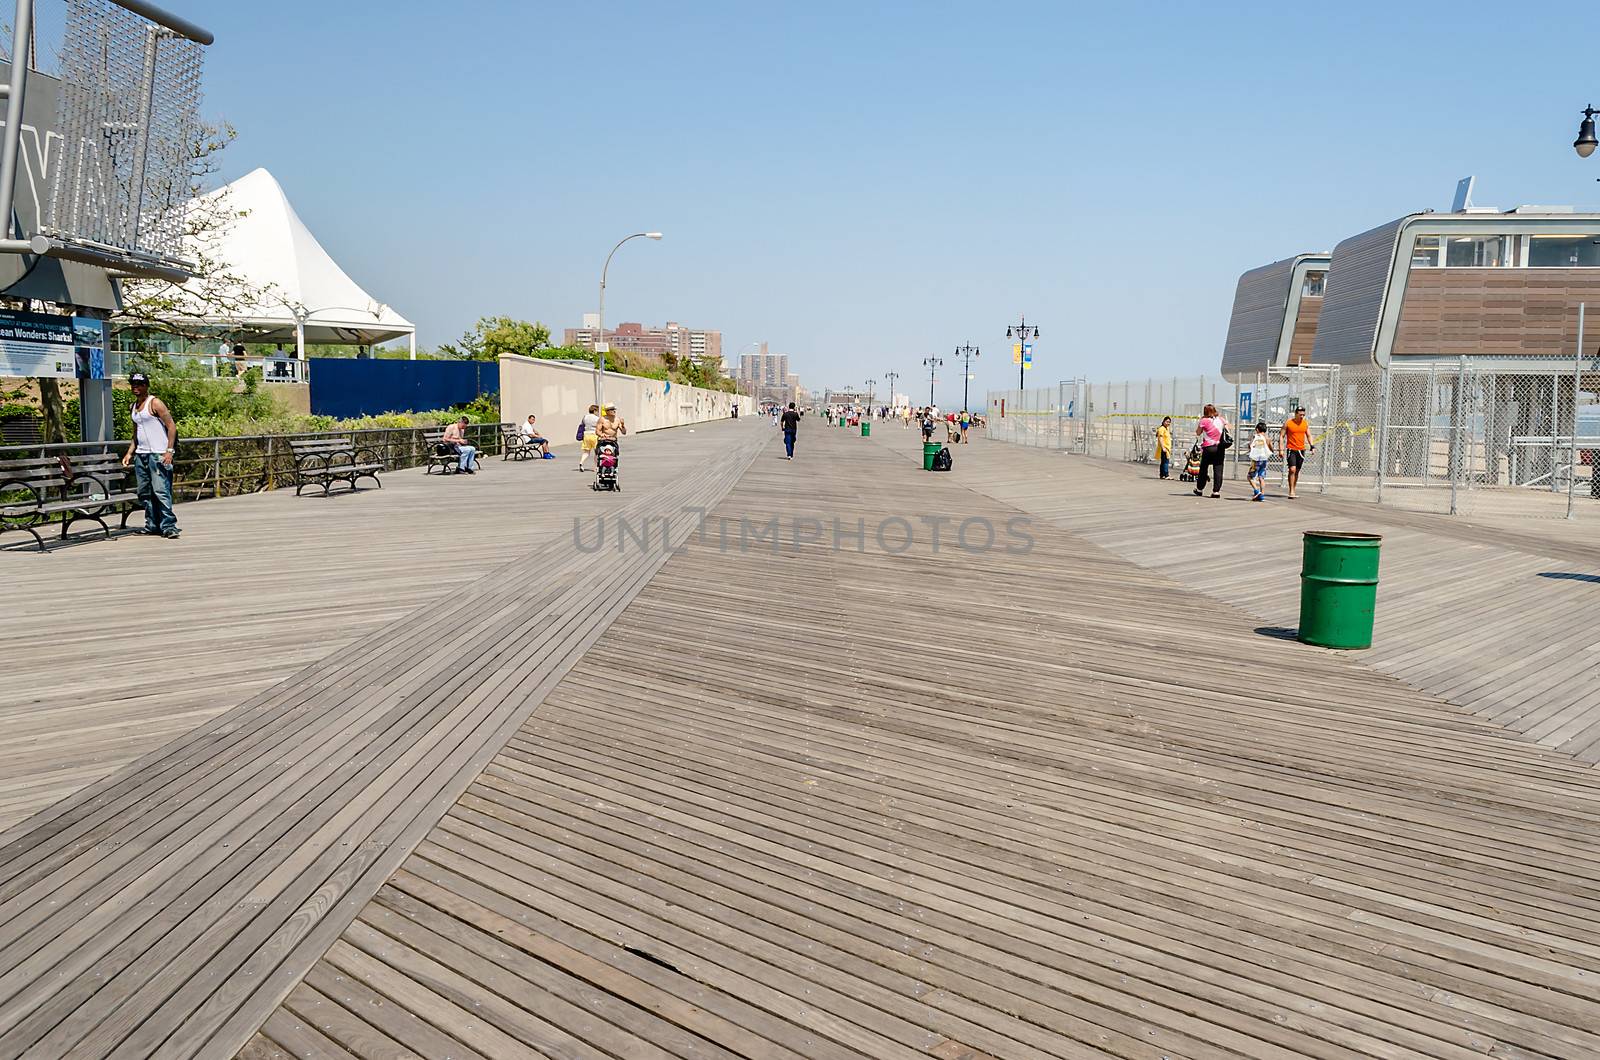 Wooden Boardwalk in Coney Island, NY by marcorubino